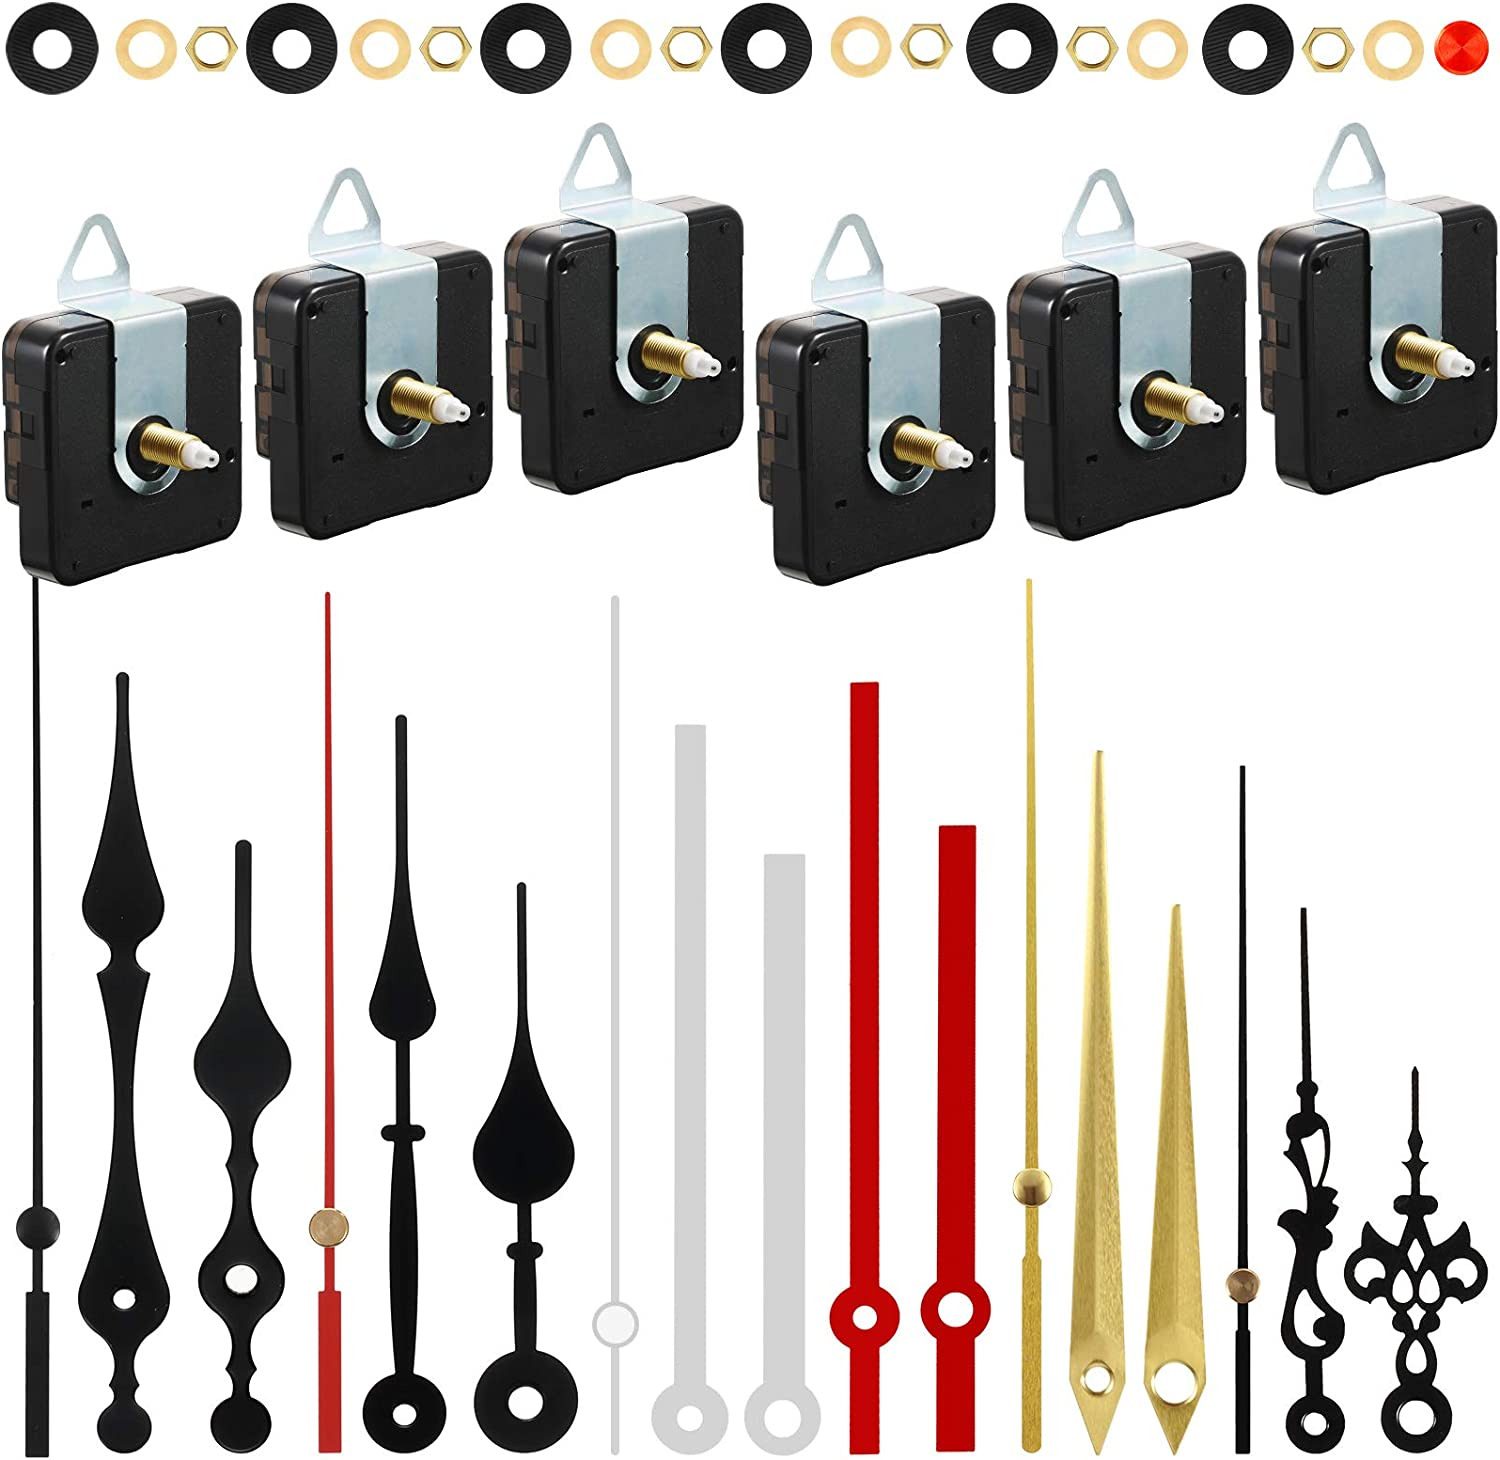 6 Pieces Quartz Clock Movement Mechanism with 6 Pairs Different DIY Clock Hands 